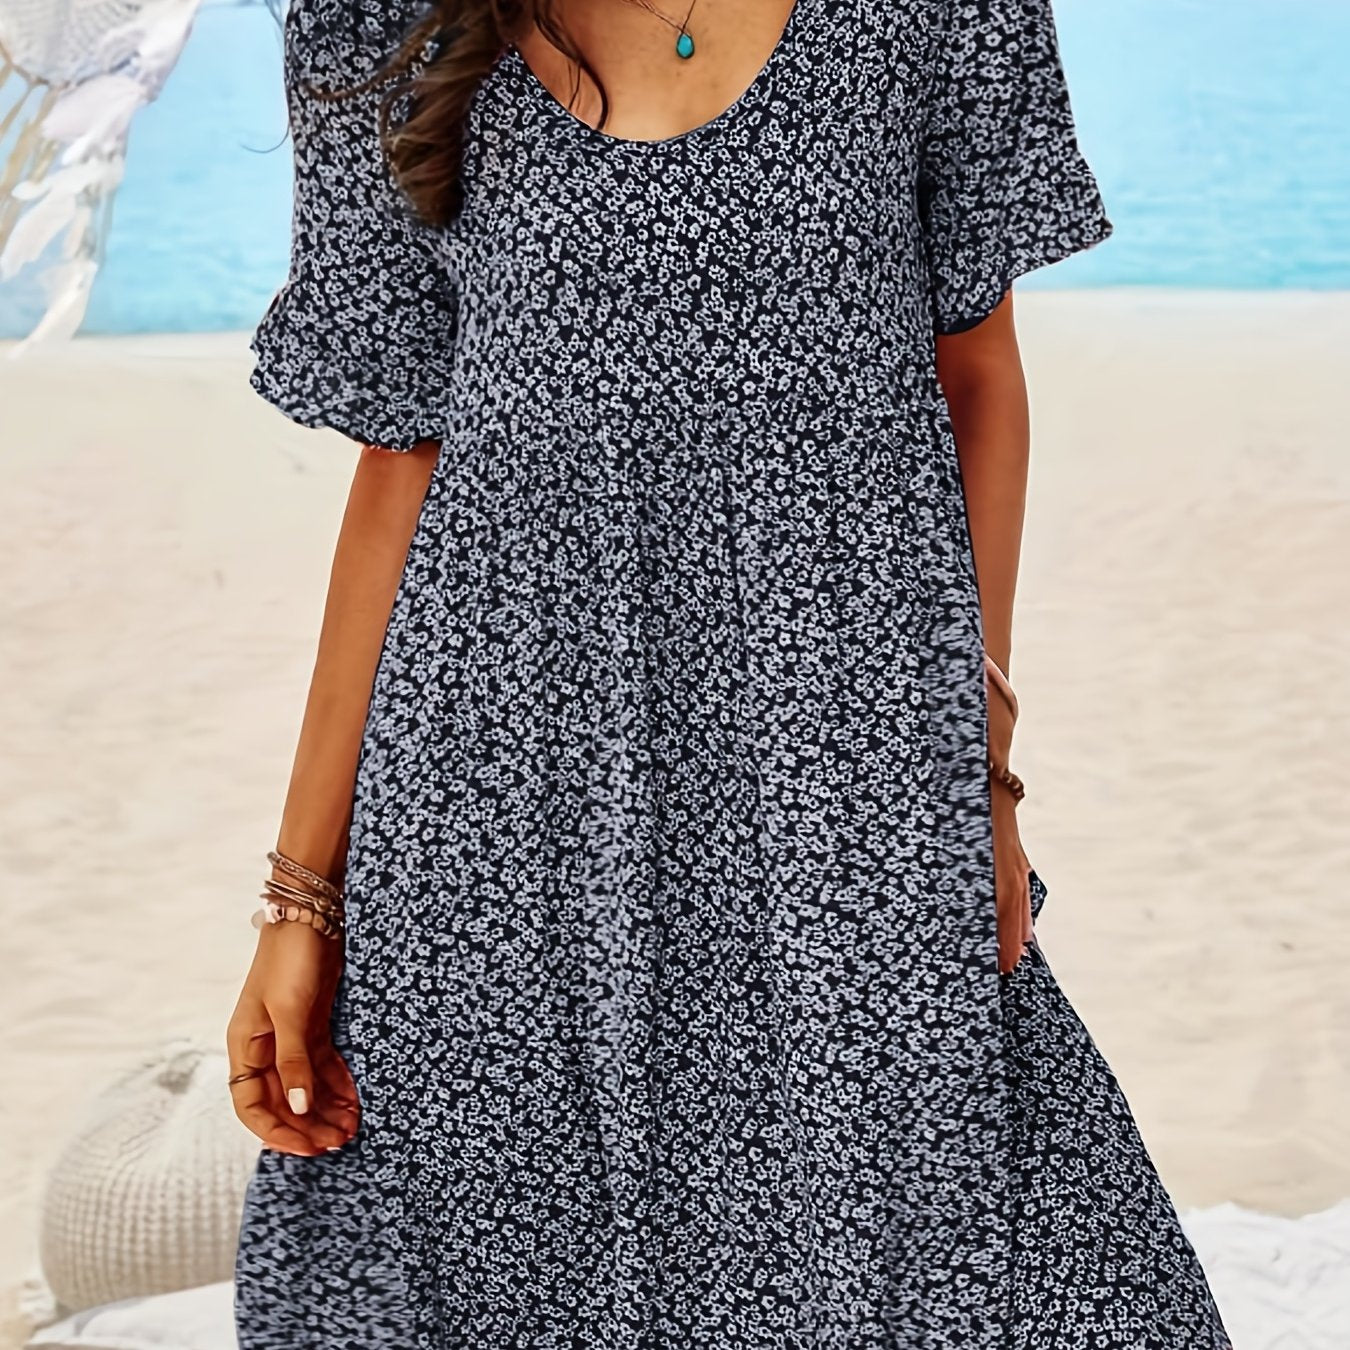 「lovevop」Ditsy Floral Print Boho Dress, Vacation Scoop Neck Short Sleeve Beach Summer Dress, Women's Clothing